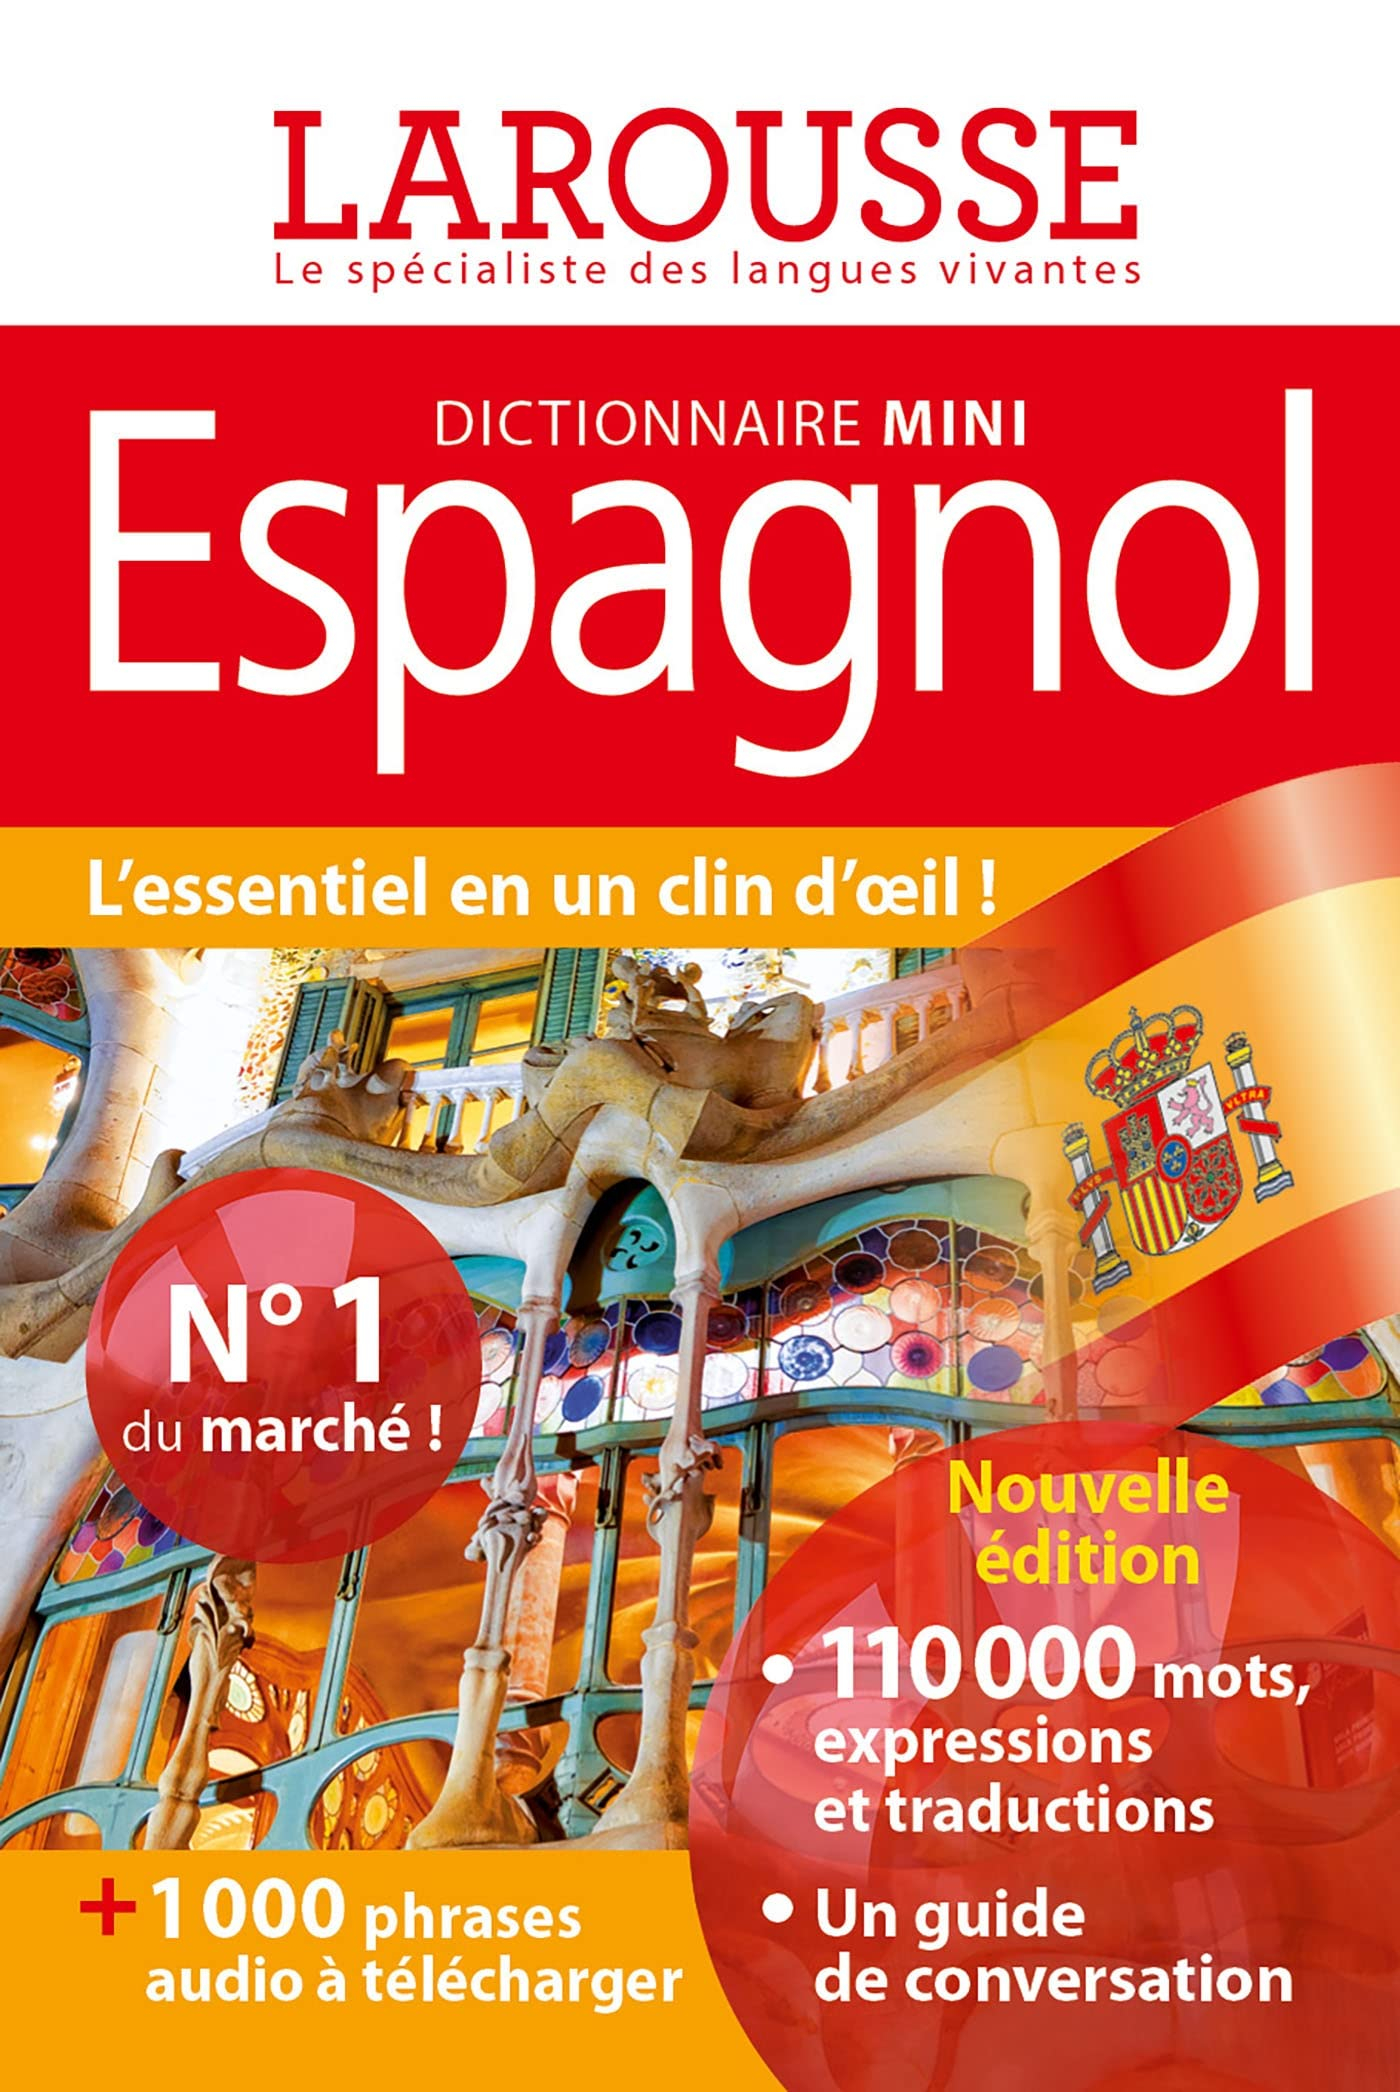 Espagnol : dictionnaire mini : français-espagnol, espagnol-français. Espanol : mini diccionario : fr